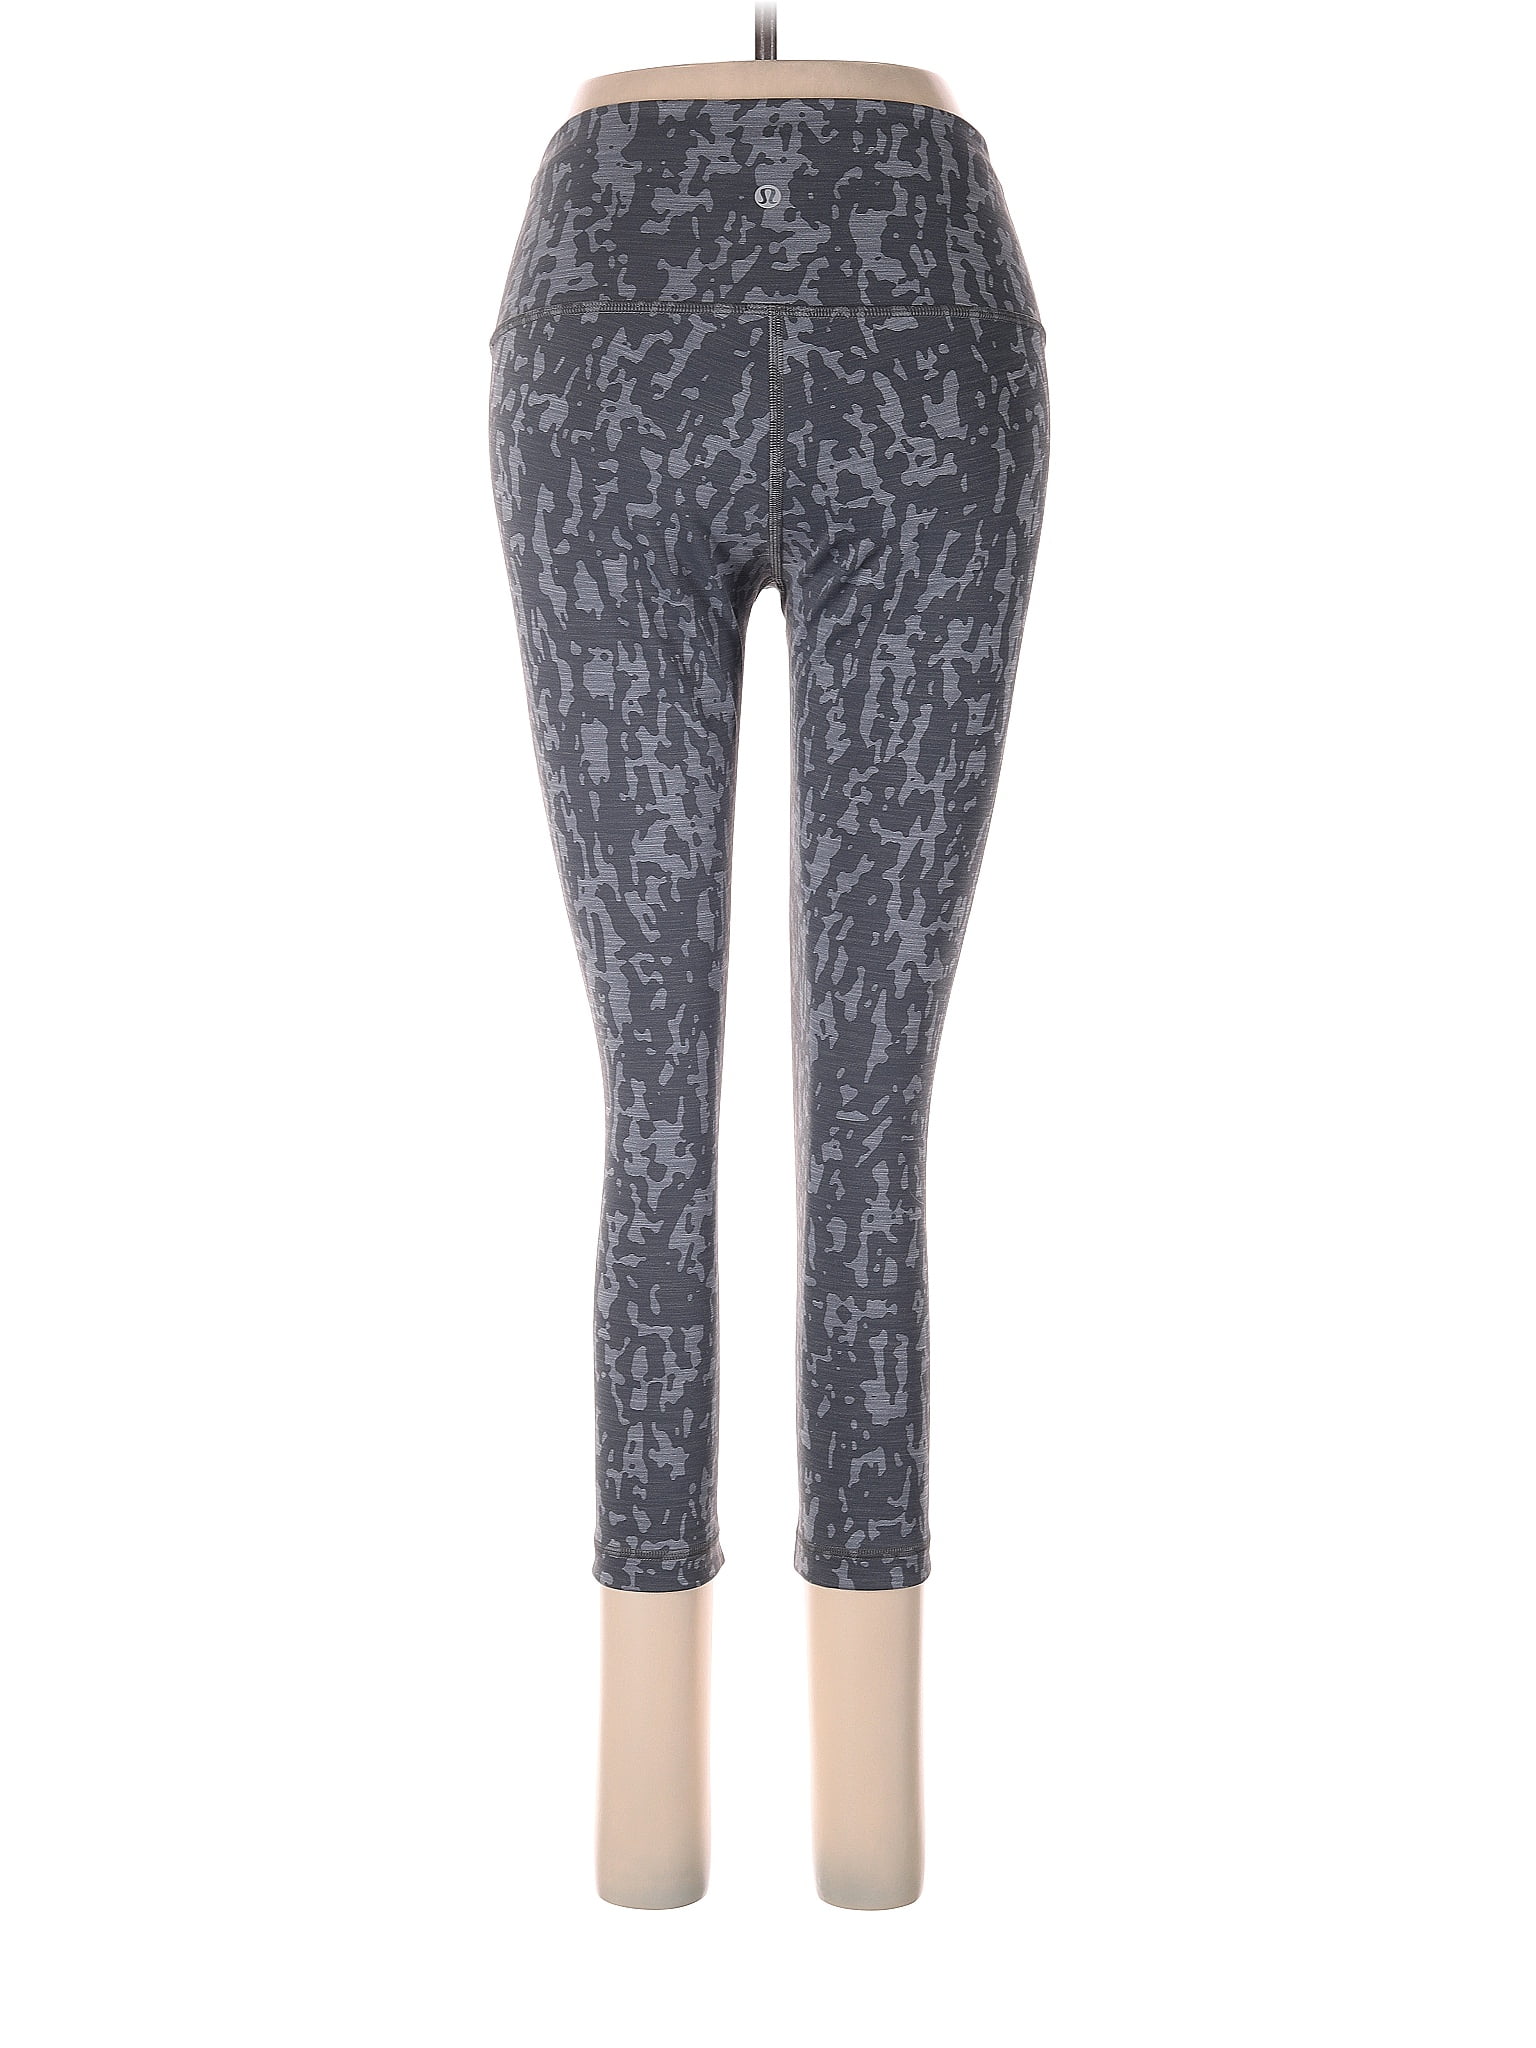 GAIAM Gray Active Pants Size XL - 52% off